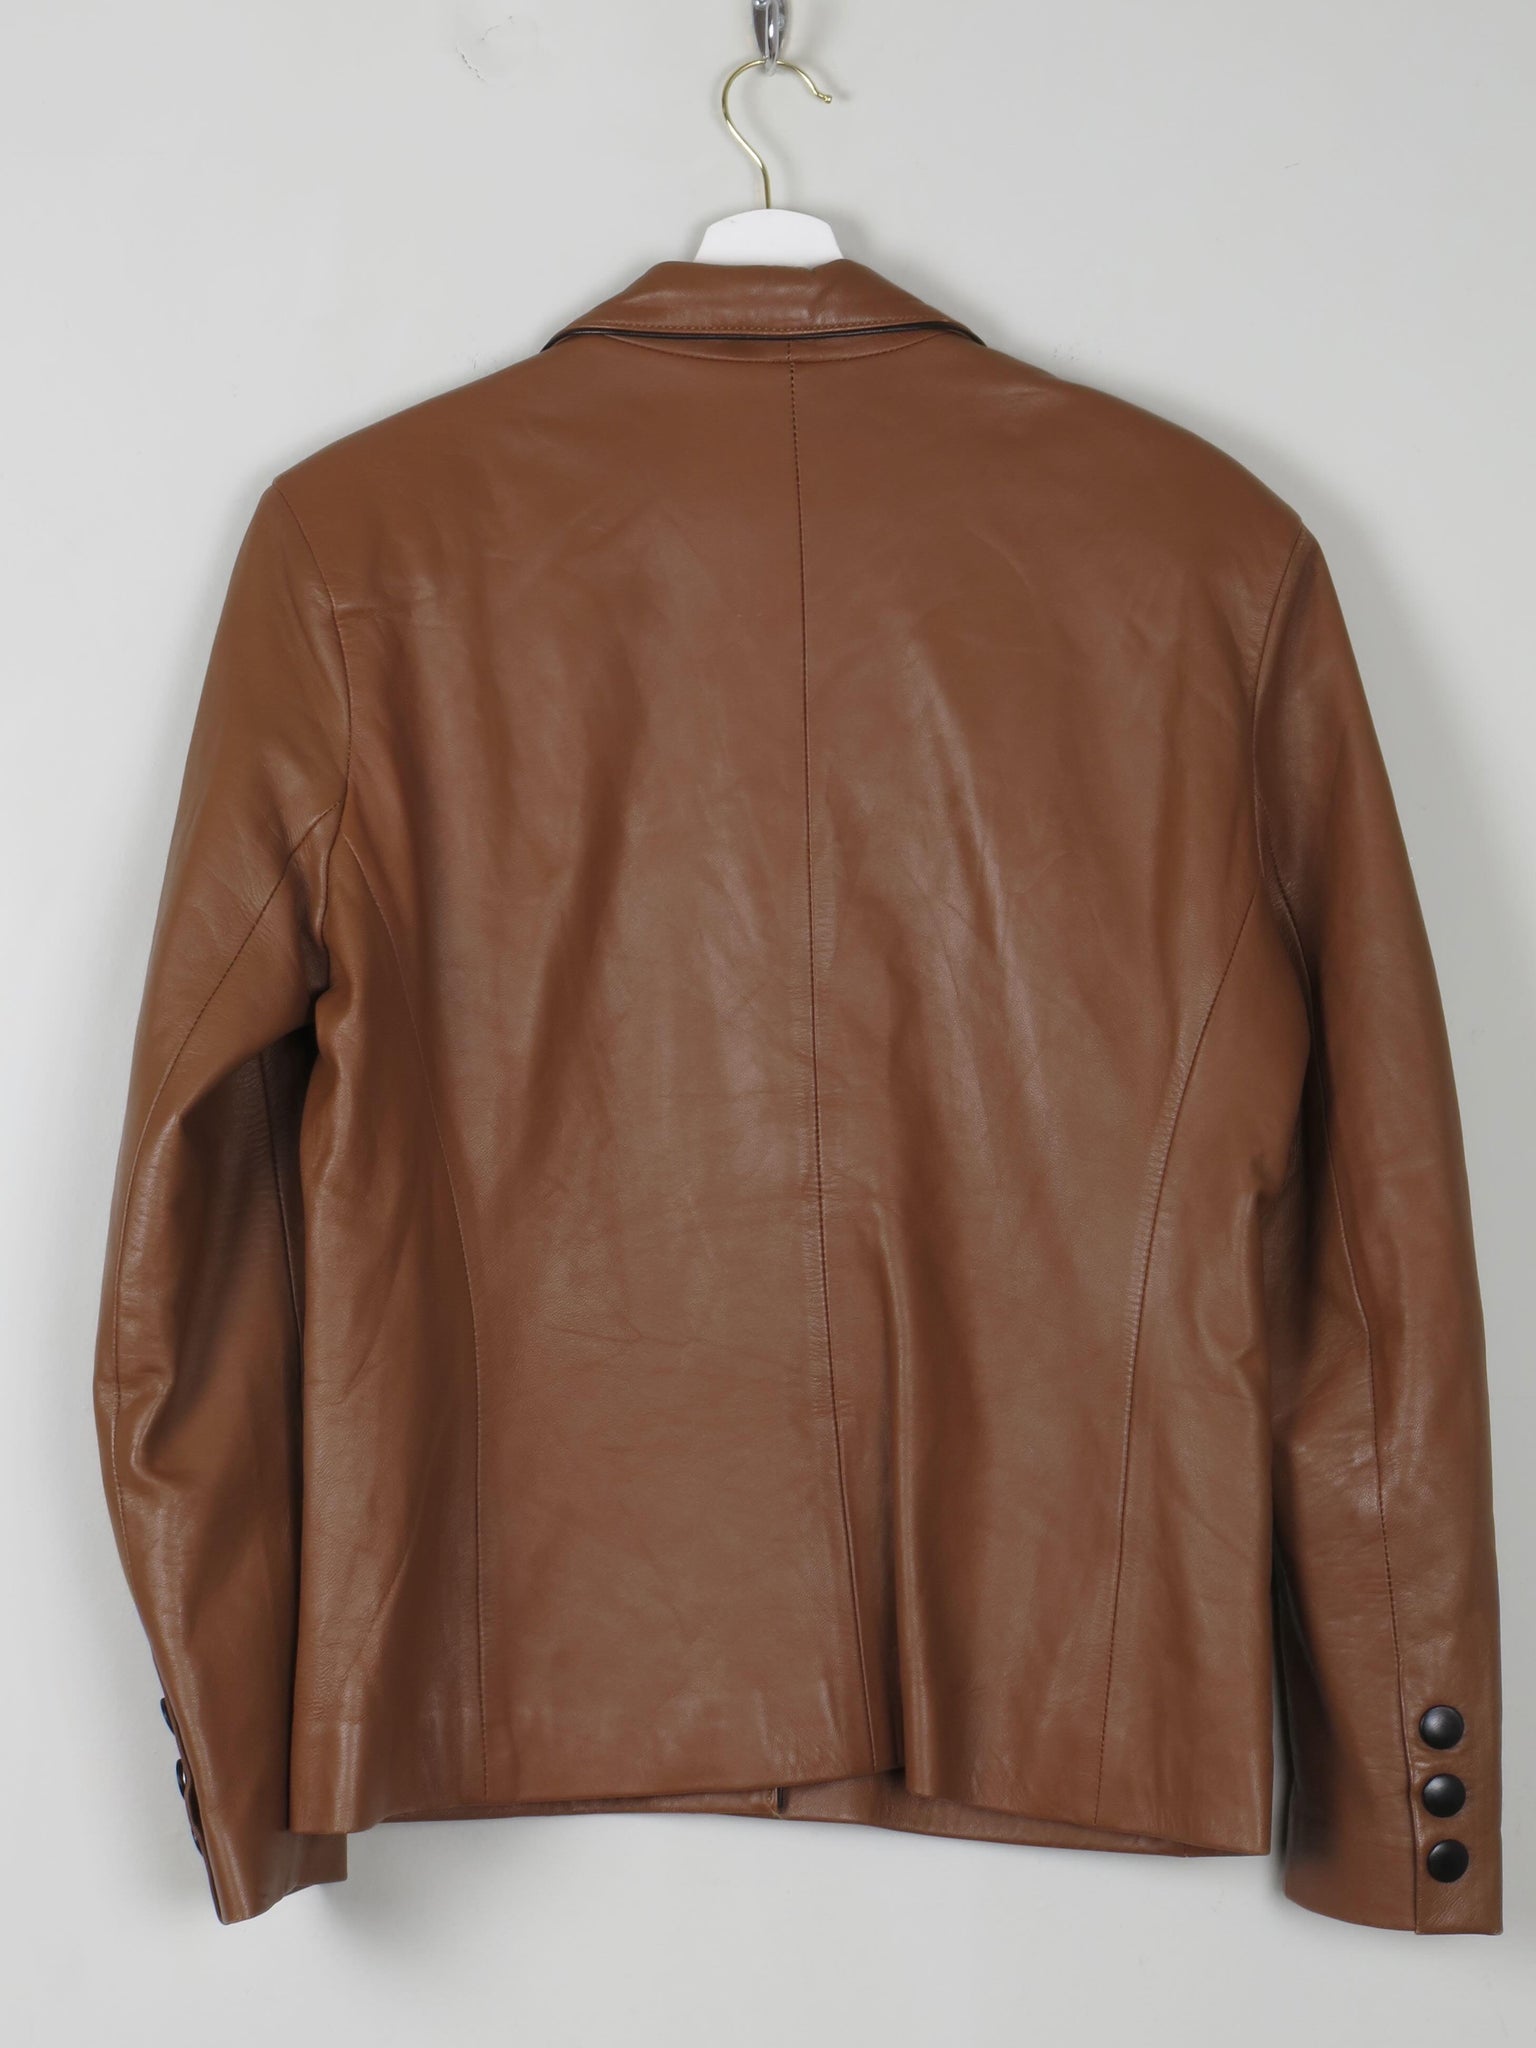 Women's Vintage Tan Leather Jacket L - The Harlequin